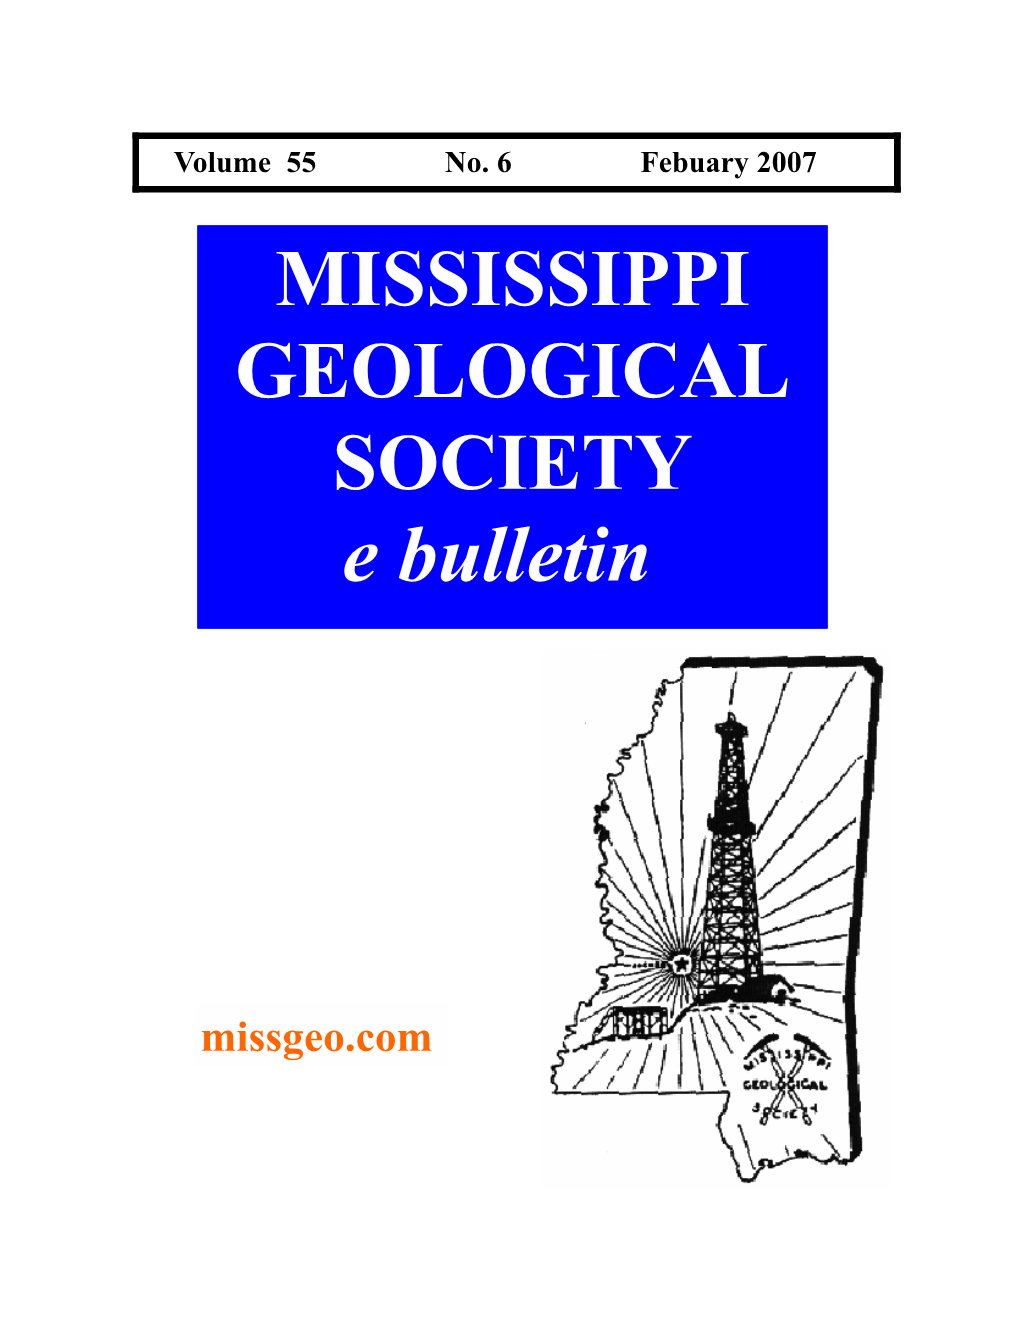 MISSISSIPPI GEOLOGICAL SOCIETY E Bulletin